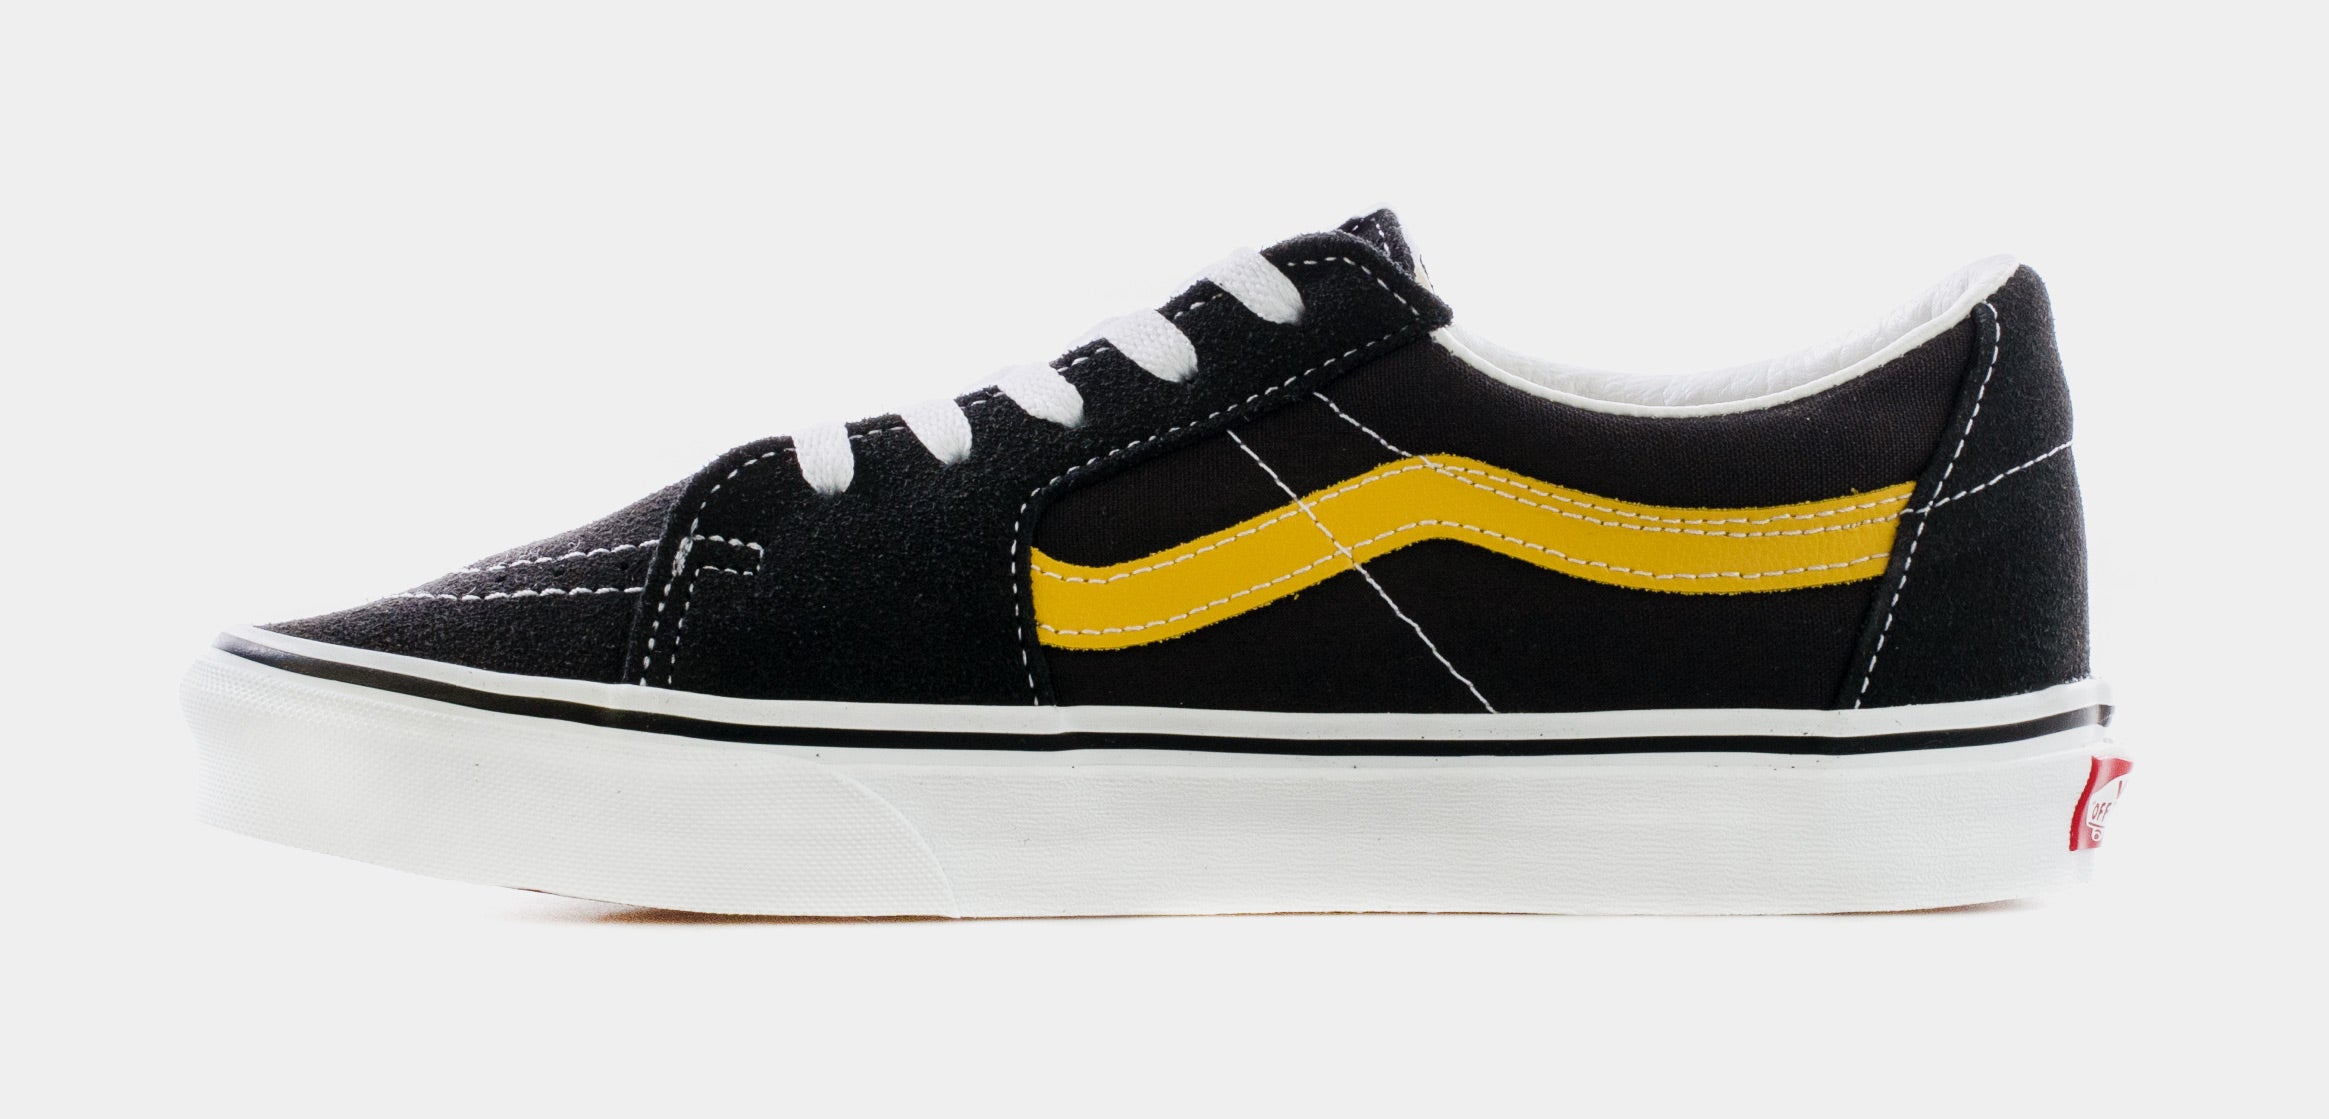 SK8 Low Mens Skate Shoes (Black/Yellow)